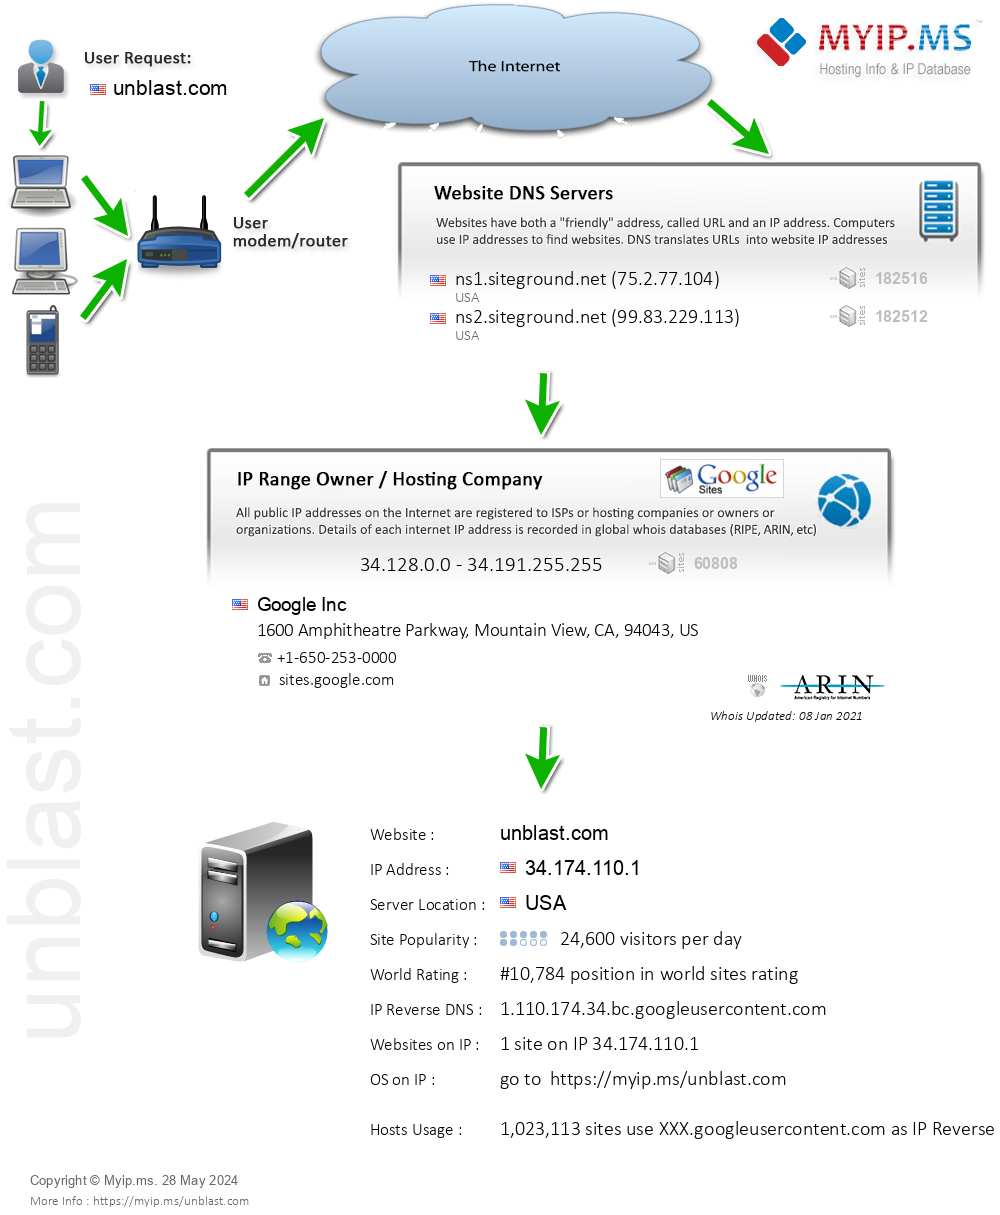 Unblast.com - Website Hosting Visual IP Diagram